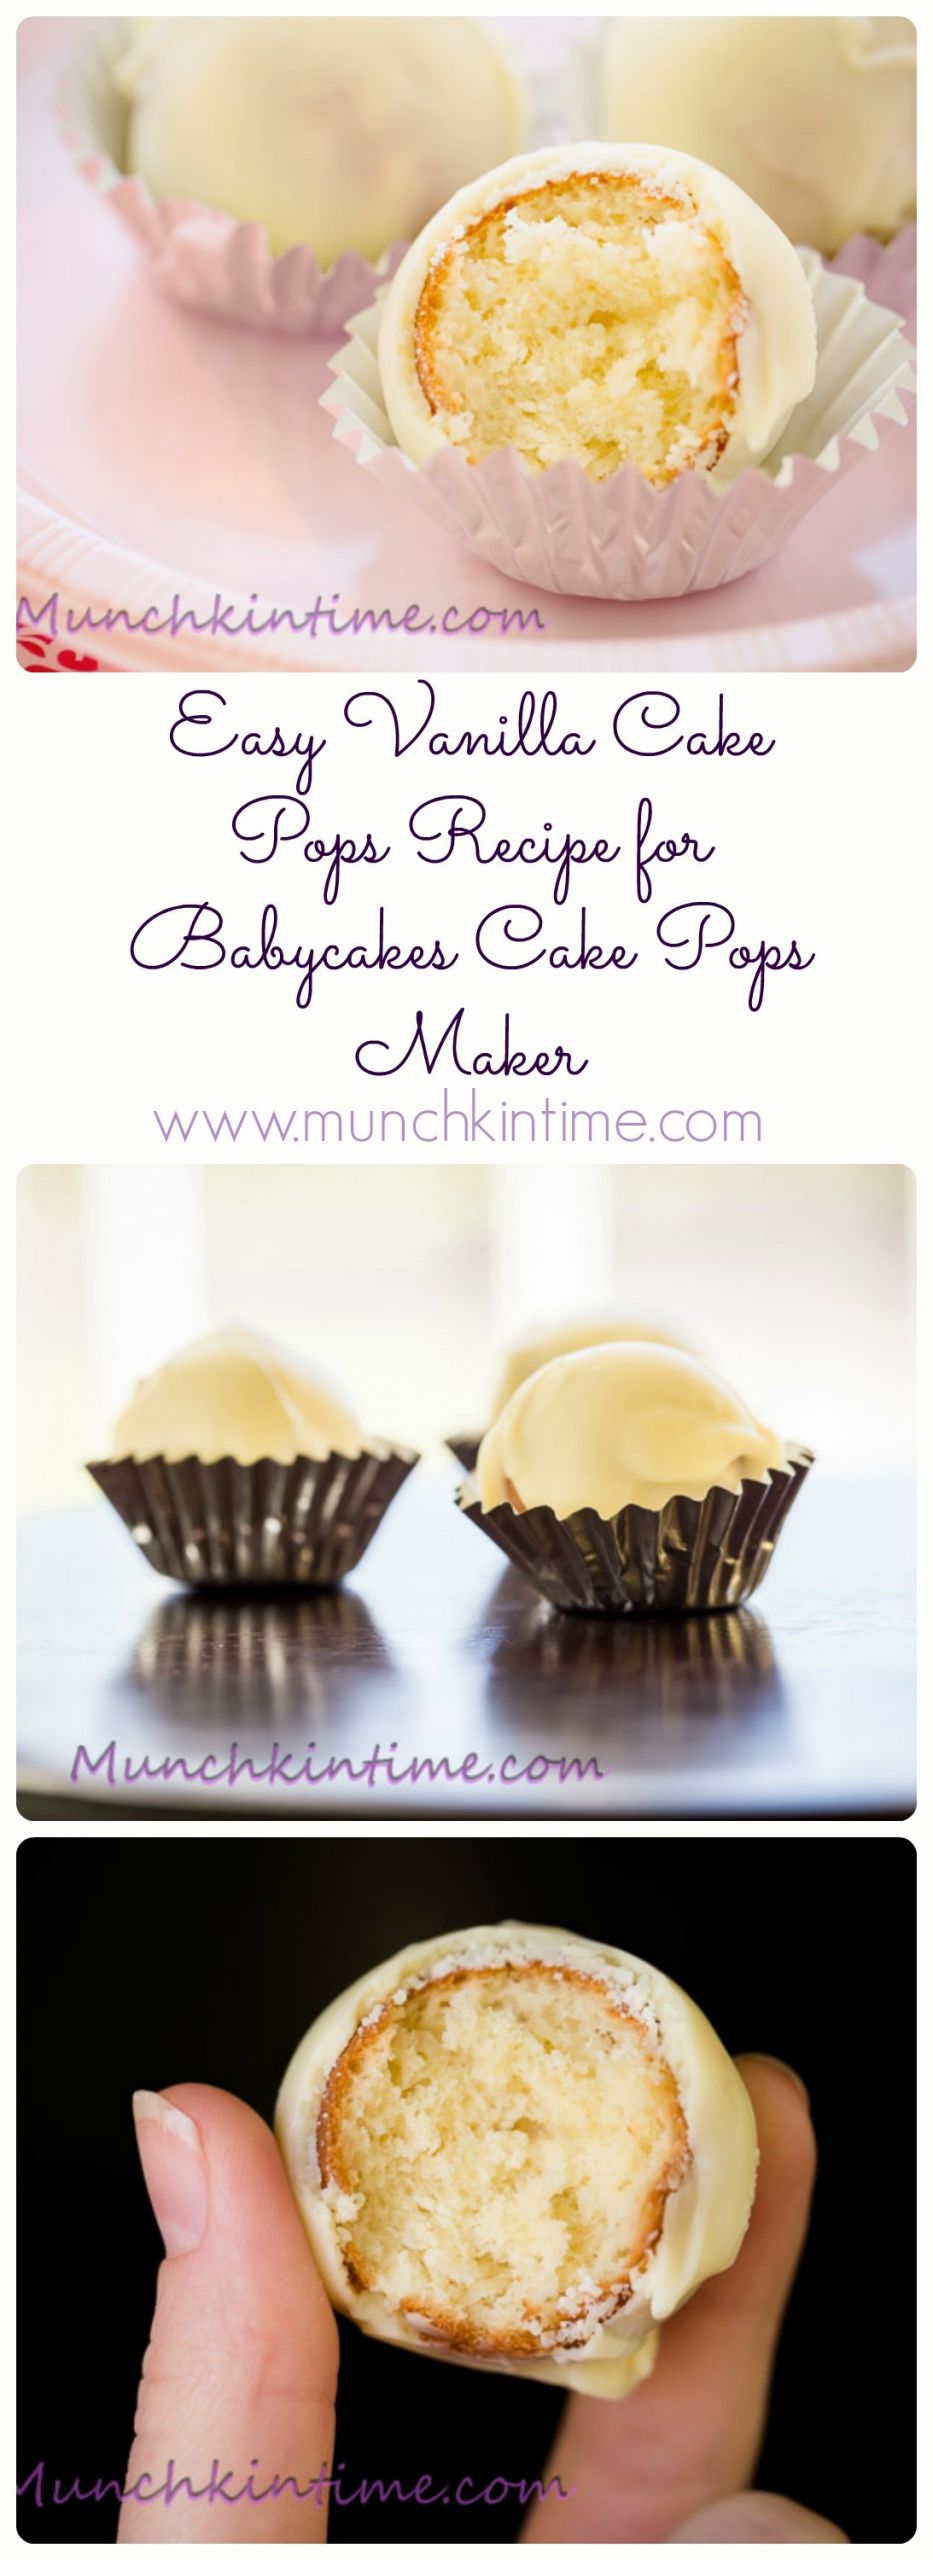 Babycakes Cake Pop Recipes
 Easy Vanilla Cake Pops Recipe for Babycakes Cake Pops Maker